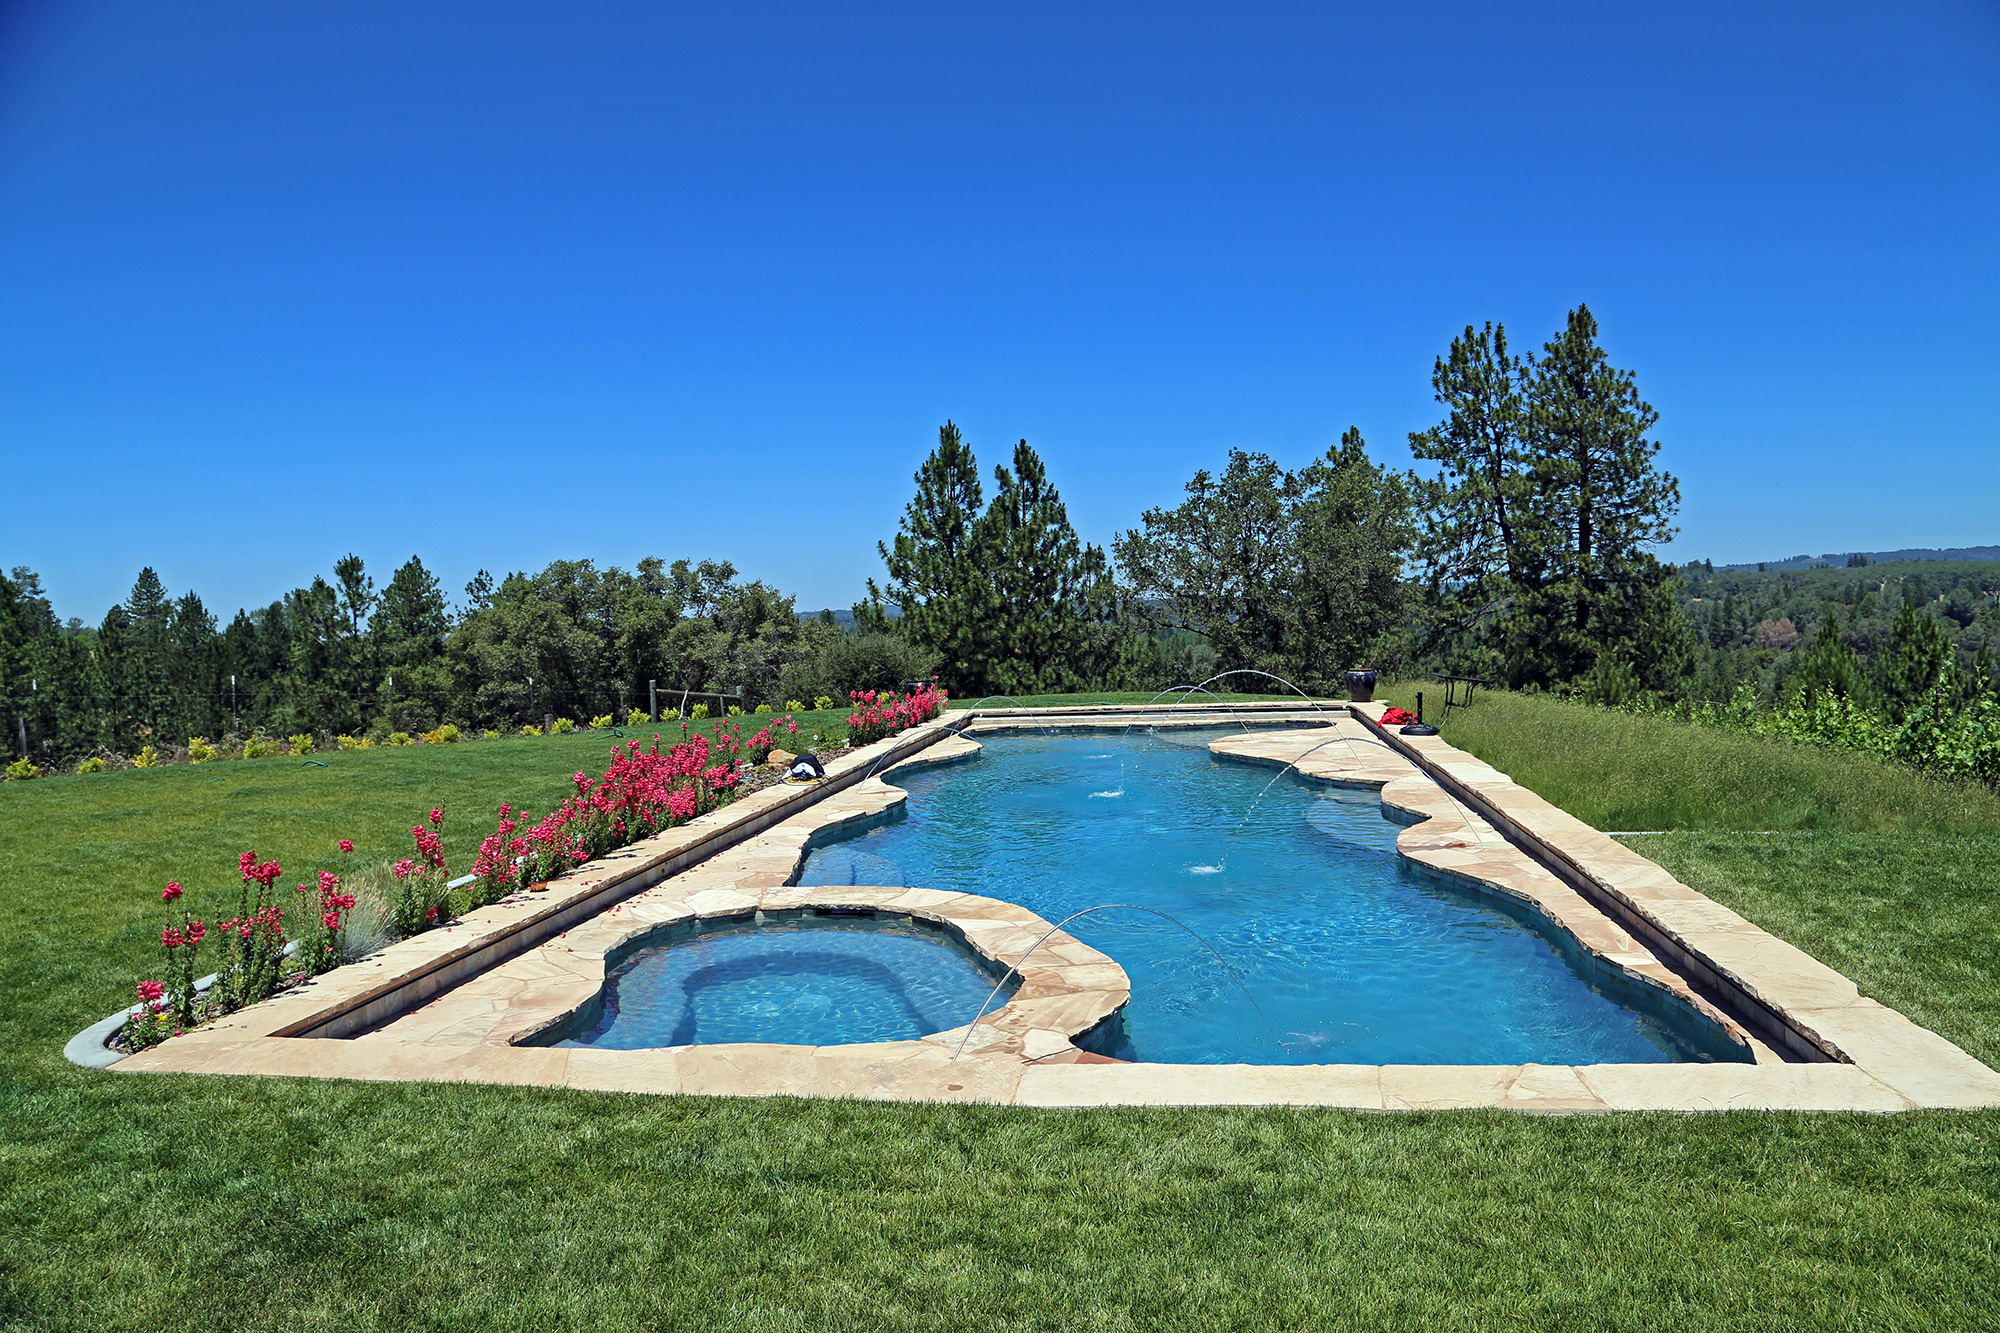 Heated swimming pool with vineyard views in the Sierra Foothills